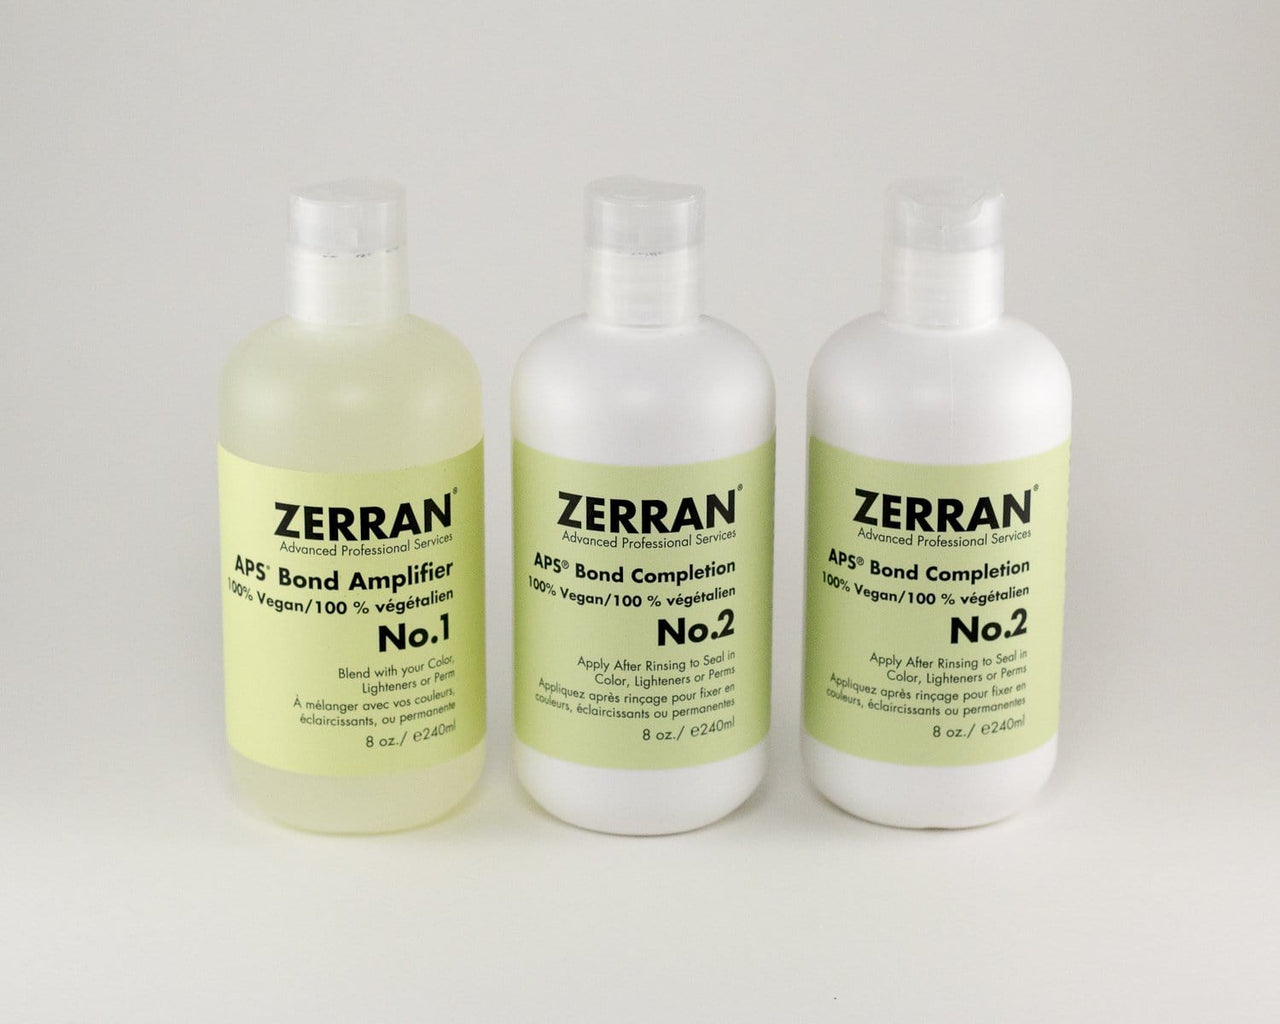 ZERRAN_APS Salon kit_Cosmetic World